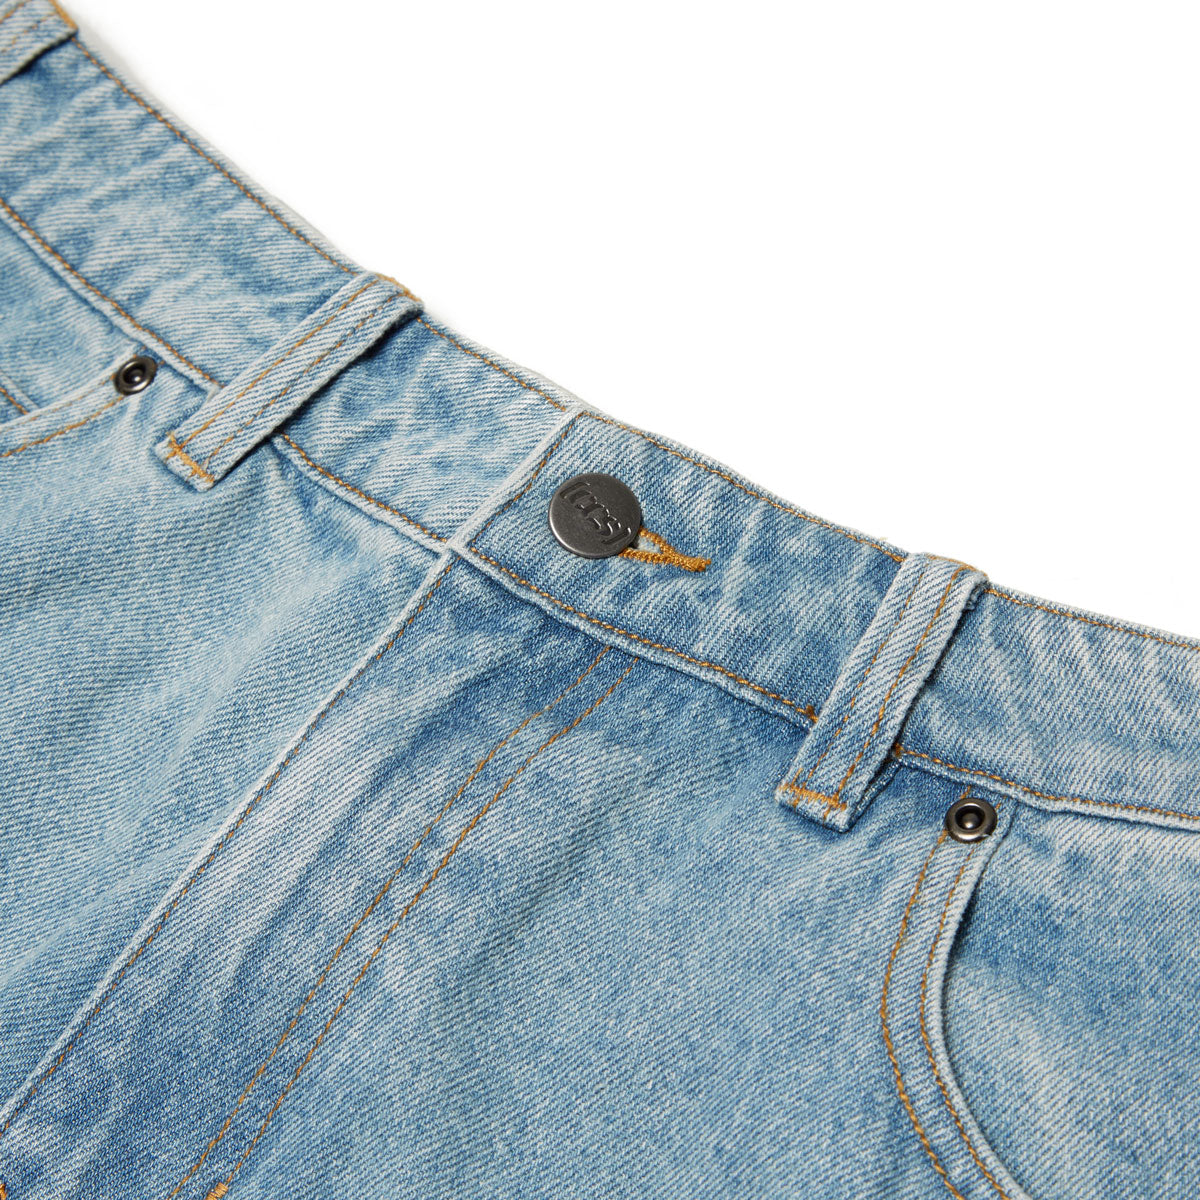 EDWIN Slim Tapered Jeans - Blue - Light Used | EDWIN Europe